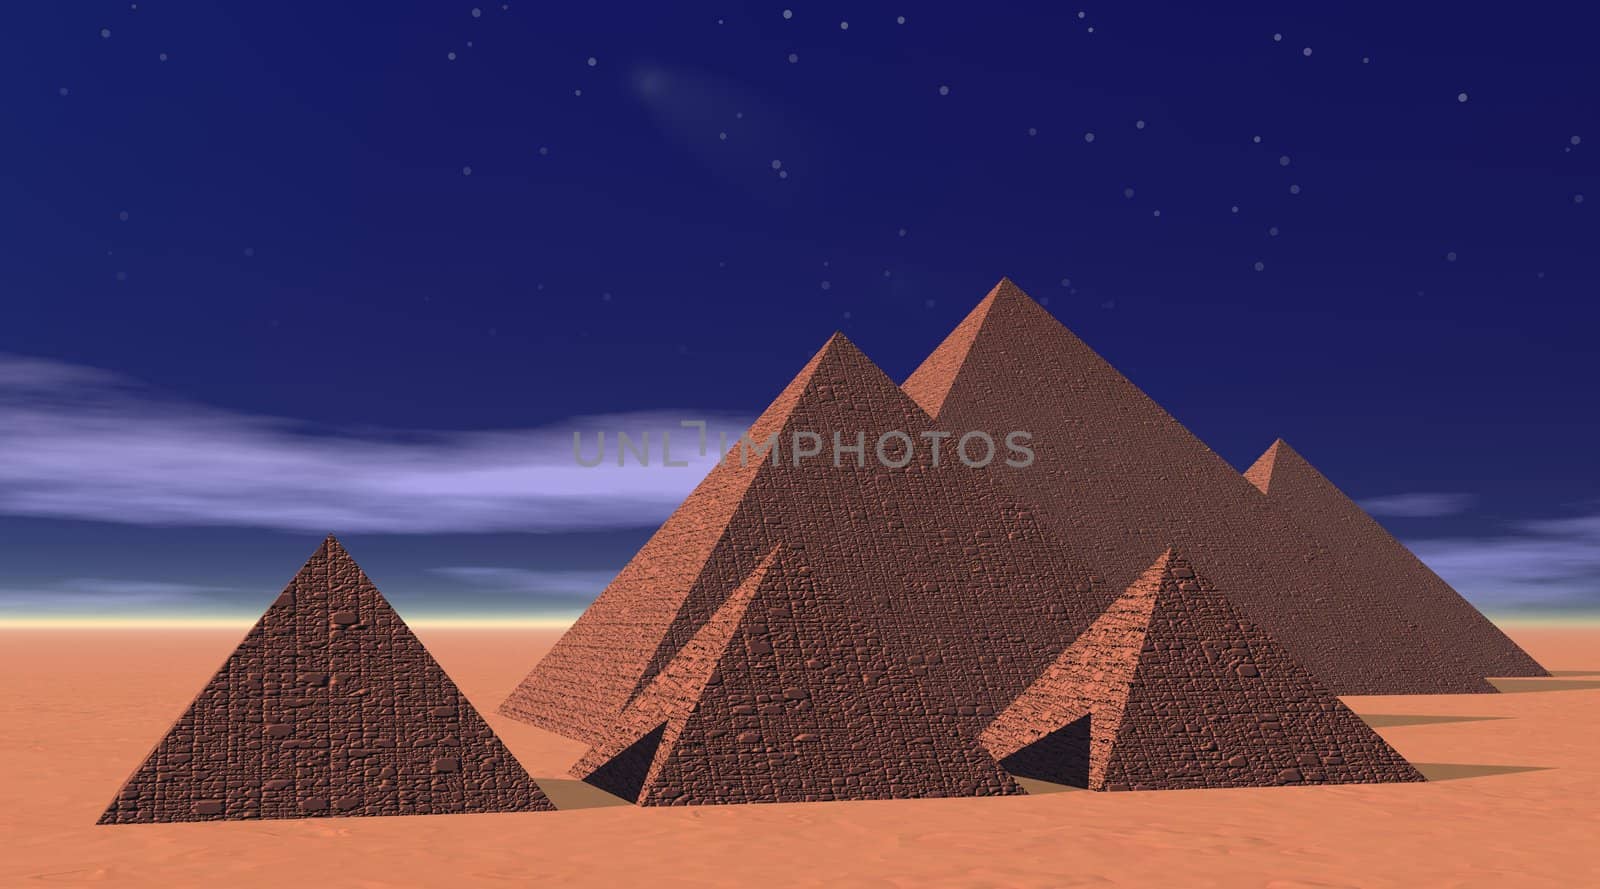 Pyramids by night by Elenaphotos21